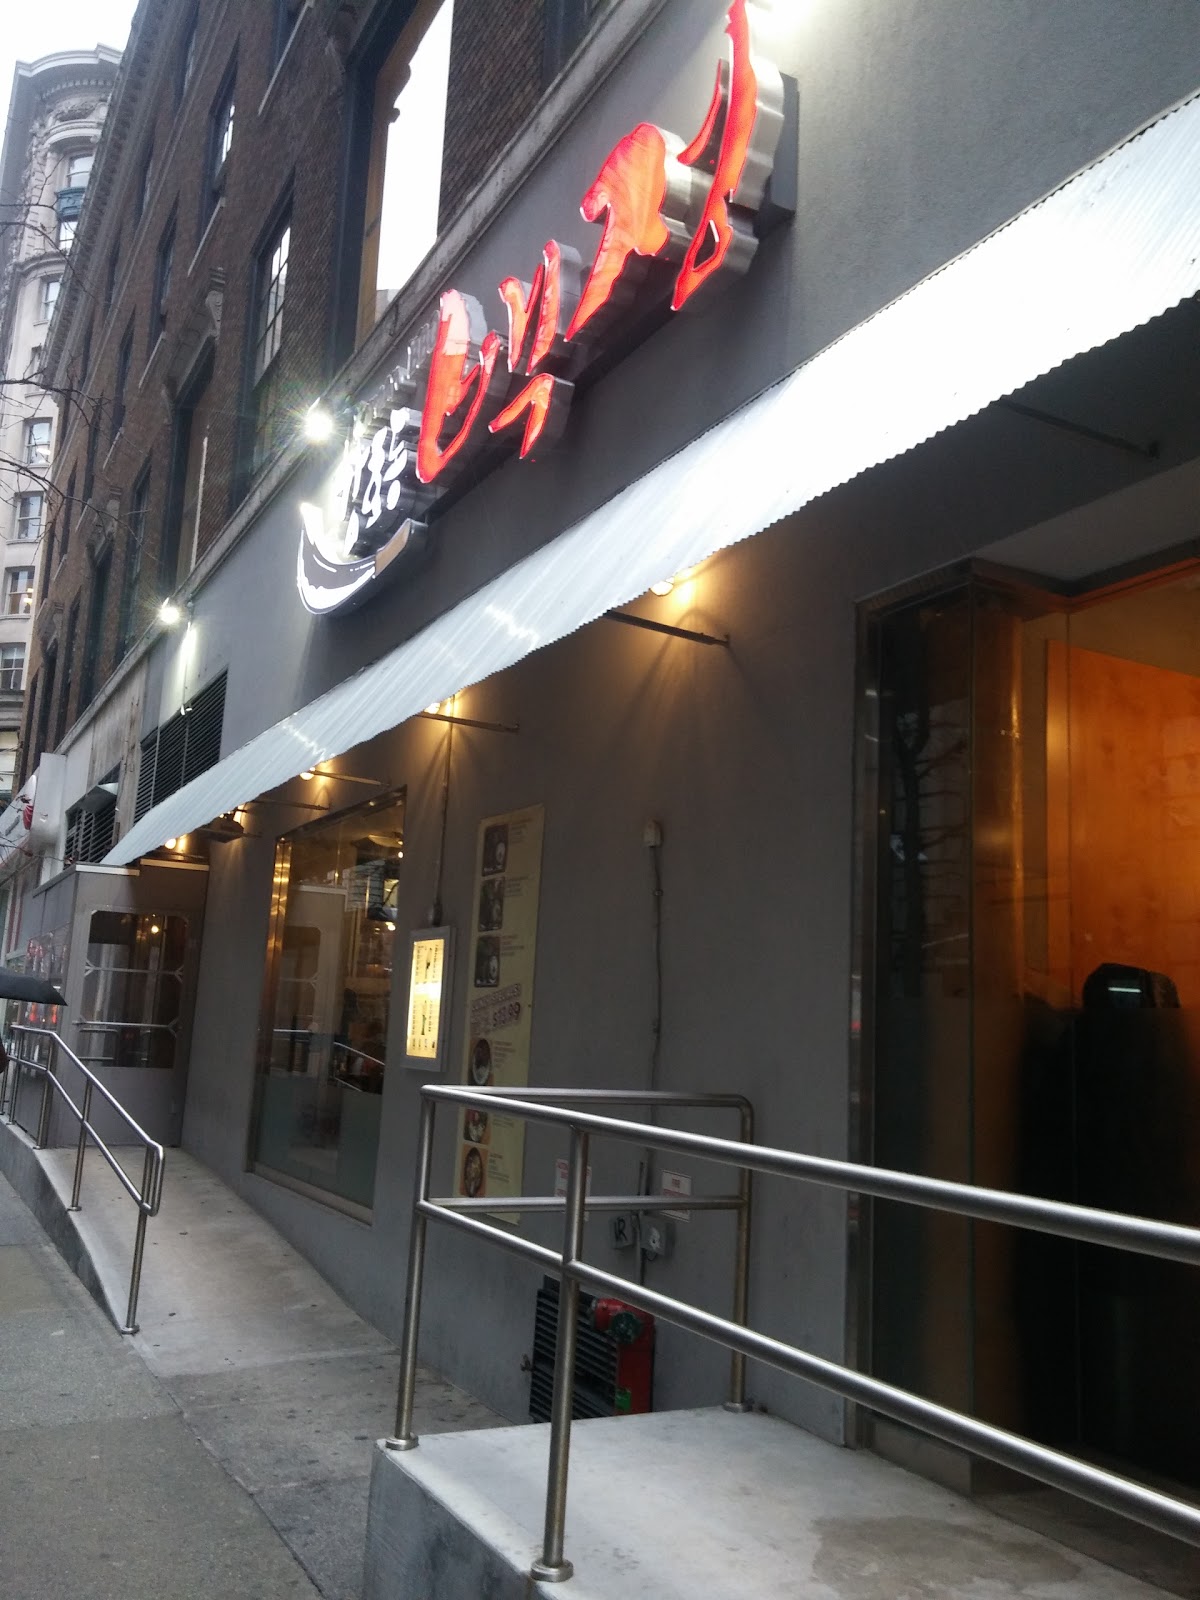 Photo of Kang Ho Dong Baekjeong in New York City, New York, United States - 3 Picture of Restaurant, Food, Point of interest, Establishment